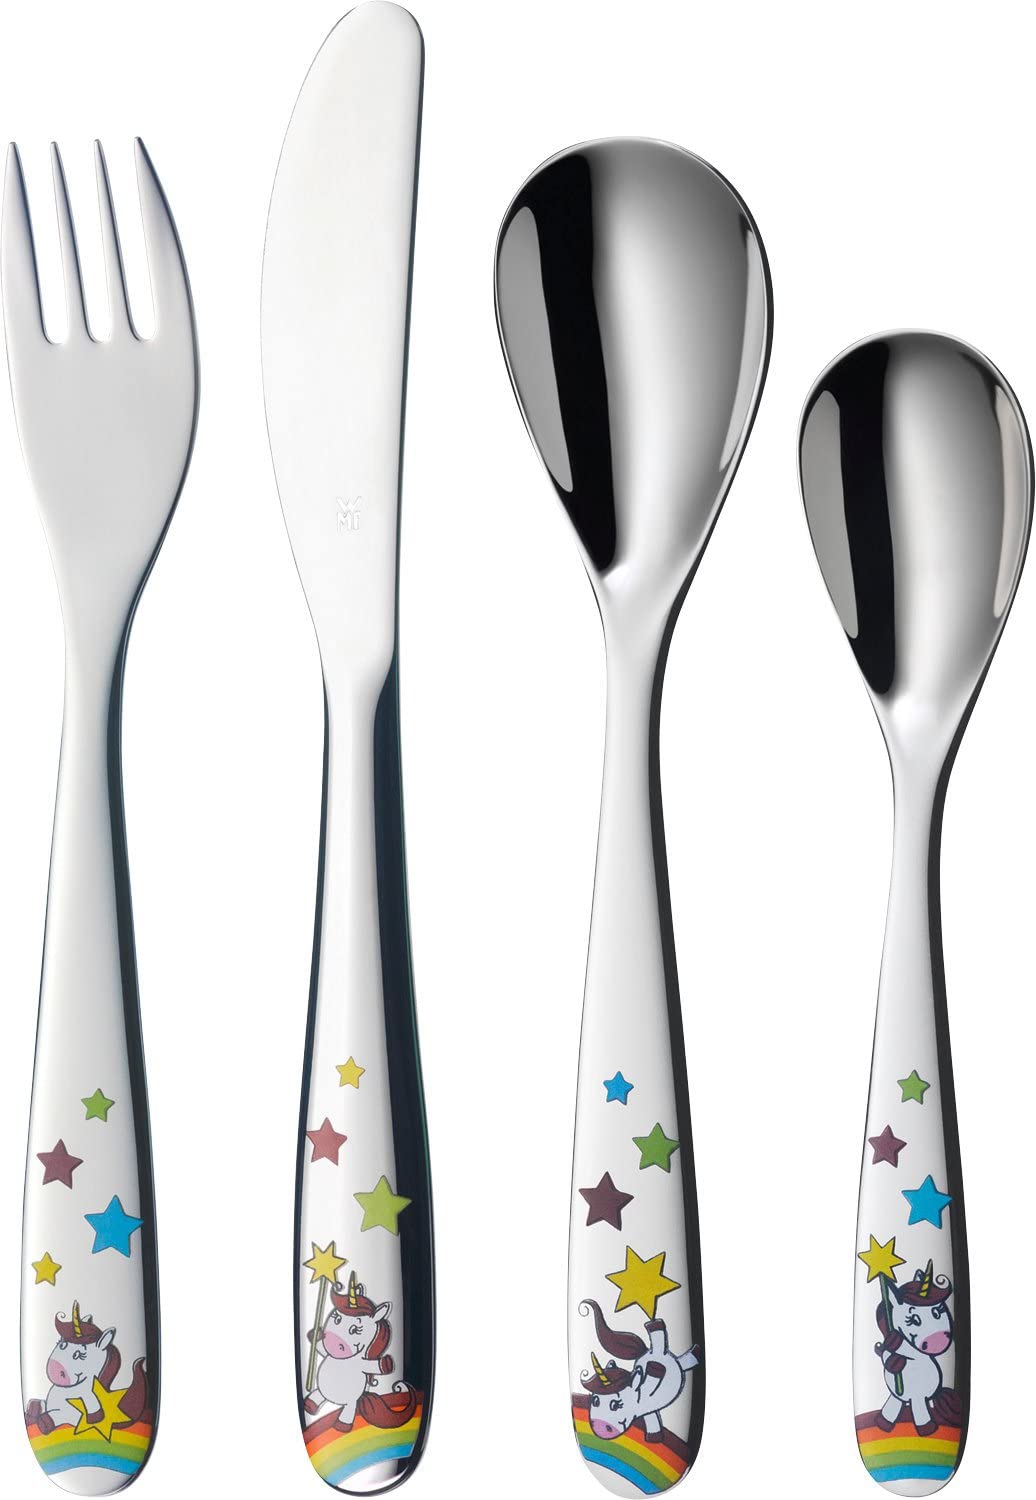 WMF Unicorn Children\'s Cutlery Set 4 Pieces Stainless Steel Cutlery Children 3-9 Years Polished Cromargan Dishwasher Safe